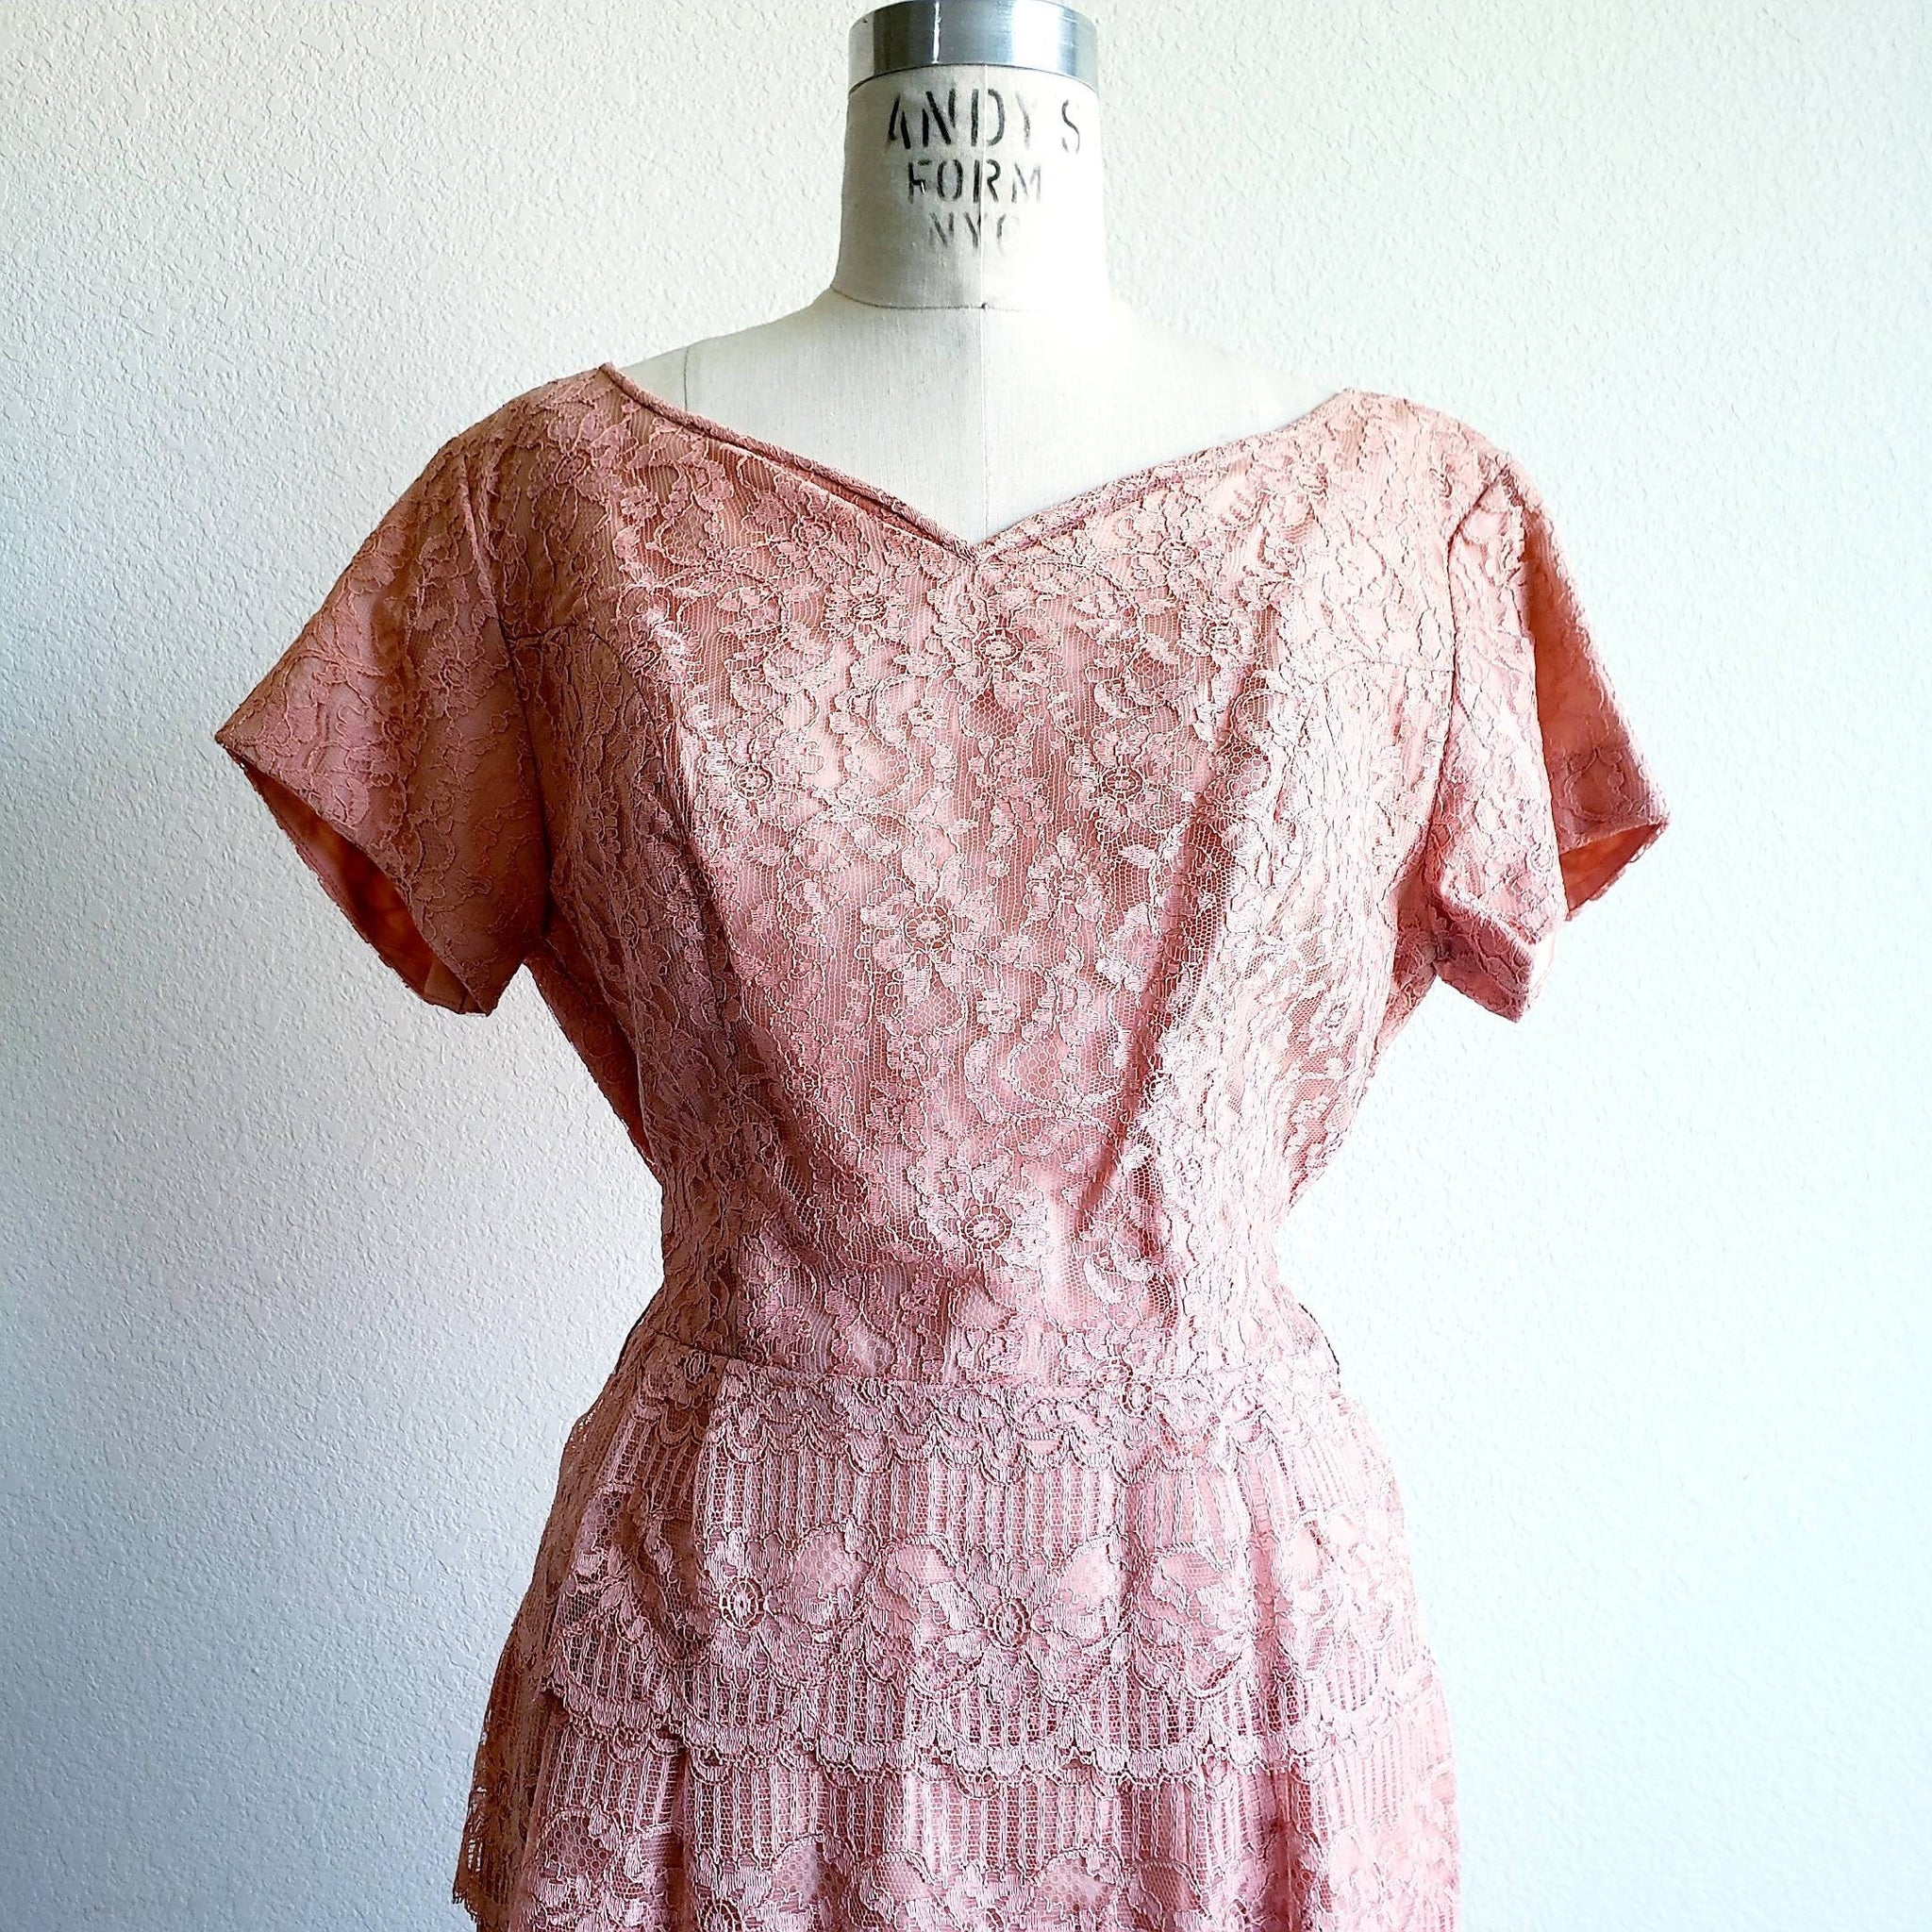 Vintage 50s/60s Pink Lace Dress - ChicCityVintage